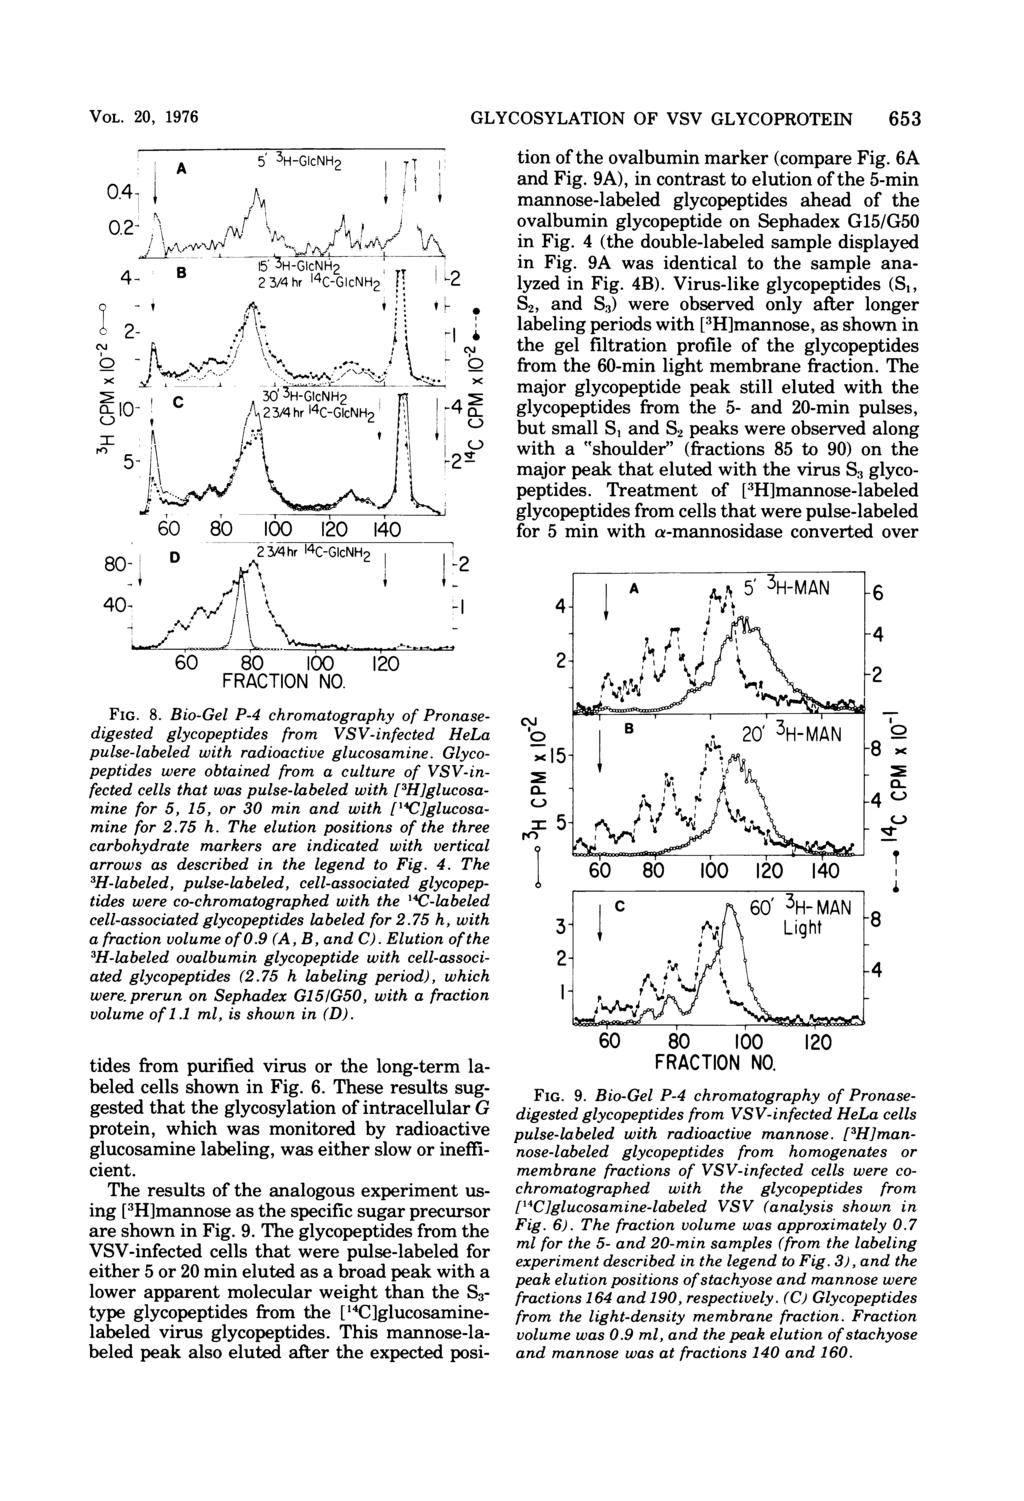 VOL. 20, 1976 D 23/4hr 14C-GIcNH2 40- r,1xy /Y J '. LI- x -. 60 80 100 120 FIG. 8. Bio-Gel P-4 chromatography of Pronasedigested glycopeptides from VSV-infected HeLa pulse-labeled with radioactive glucosamine.